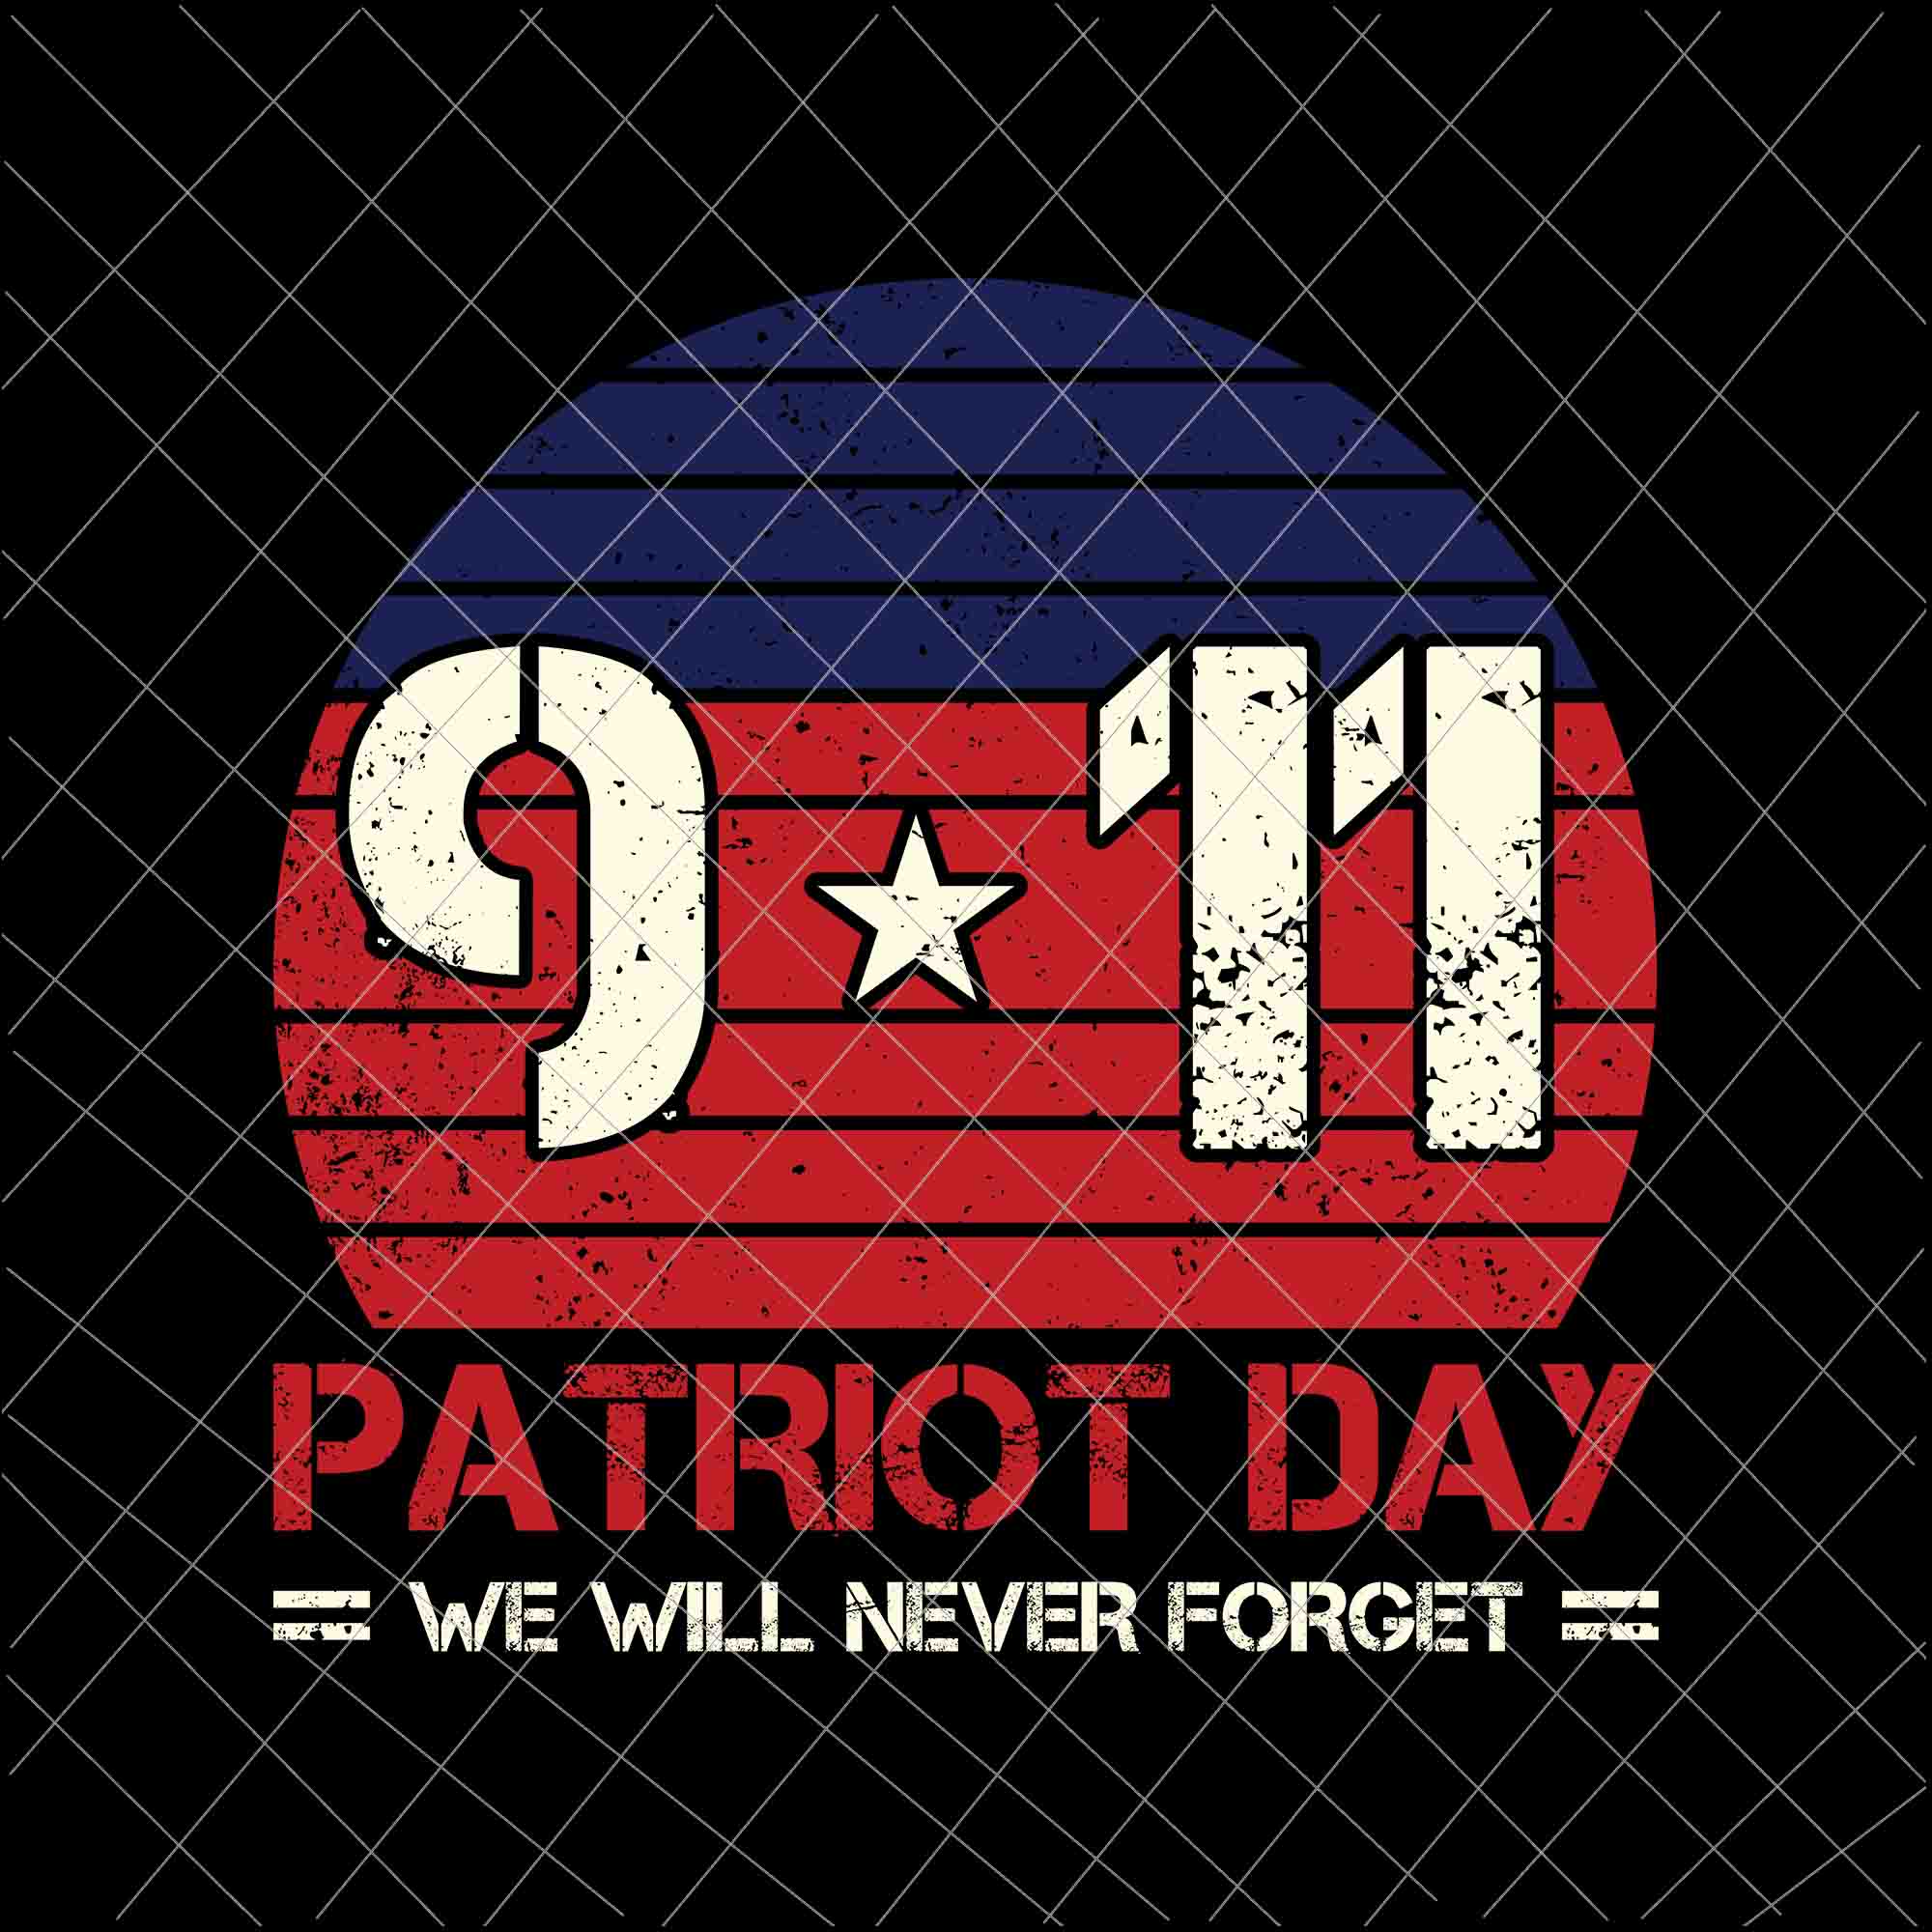 We Will Never Forget Svg, National Day Of Remembrance Patriot Day Svg, September 11th Never Forget svg, 9/11 Svg